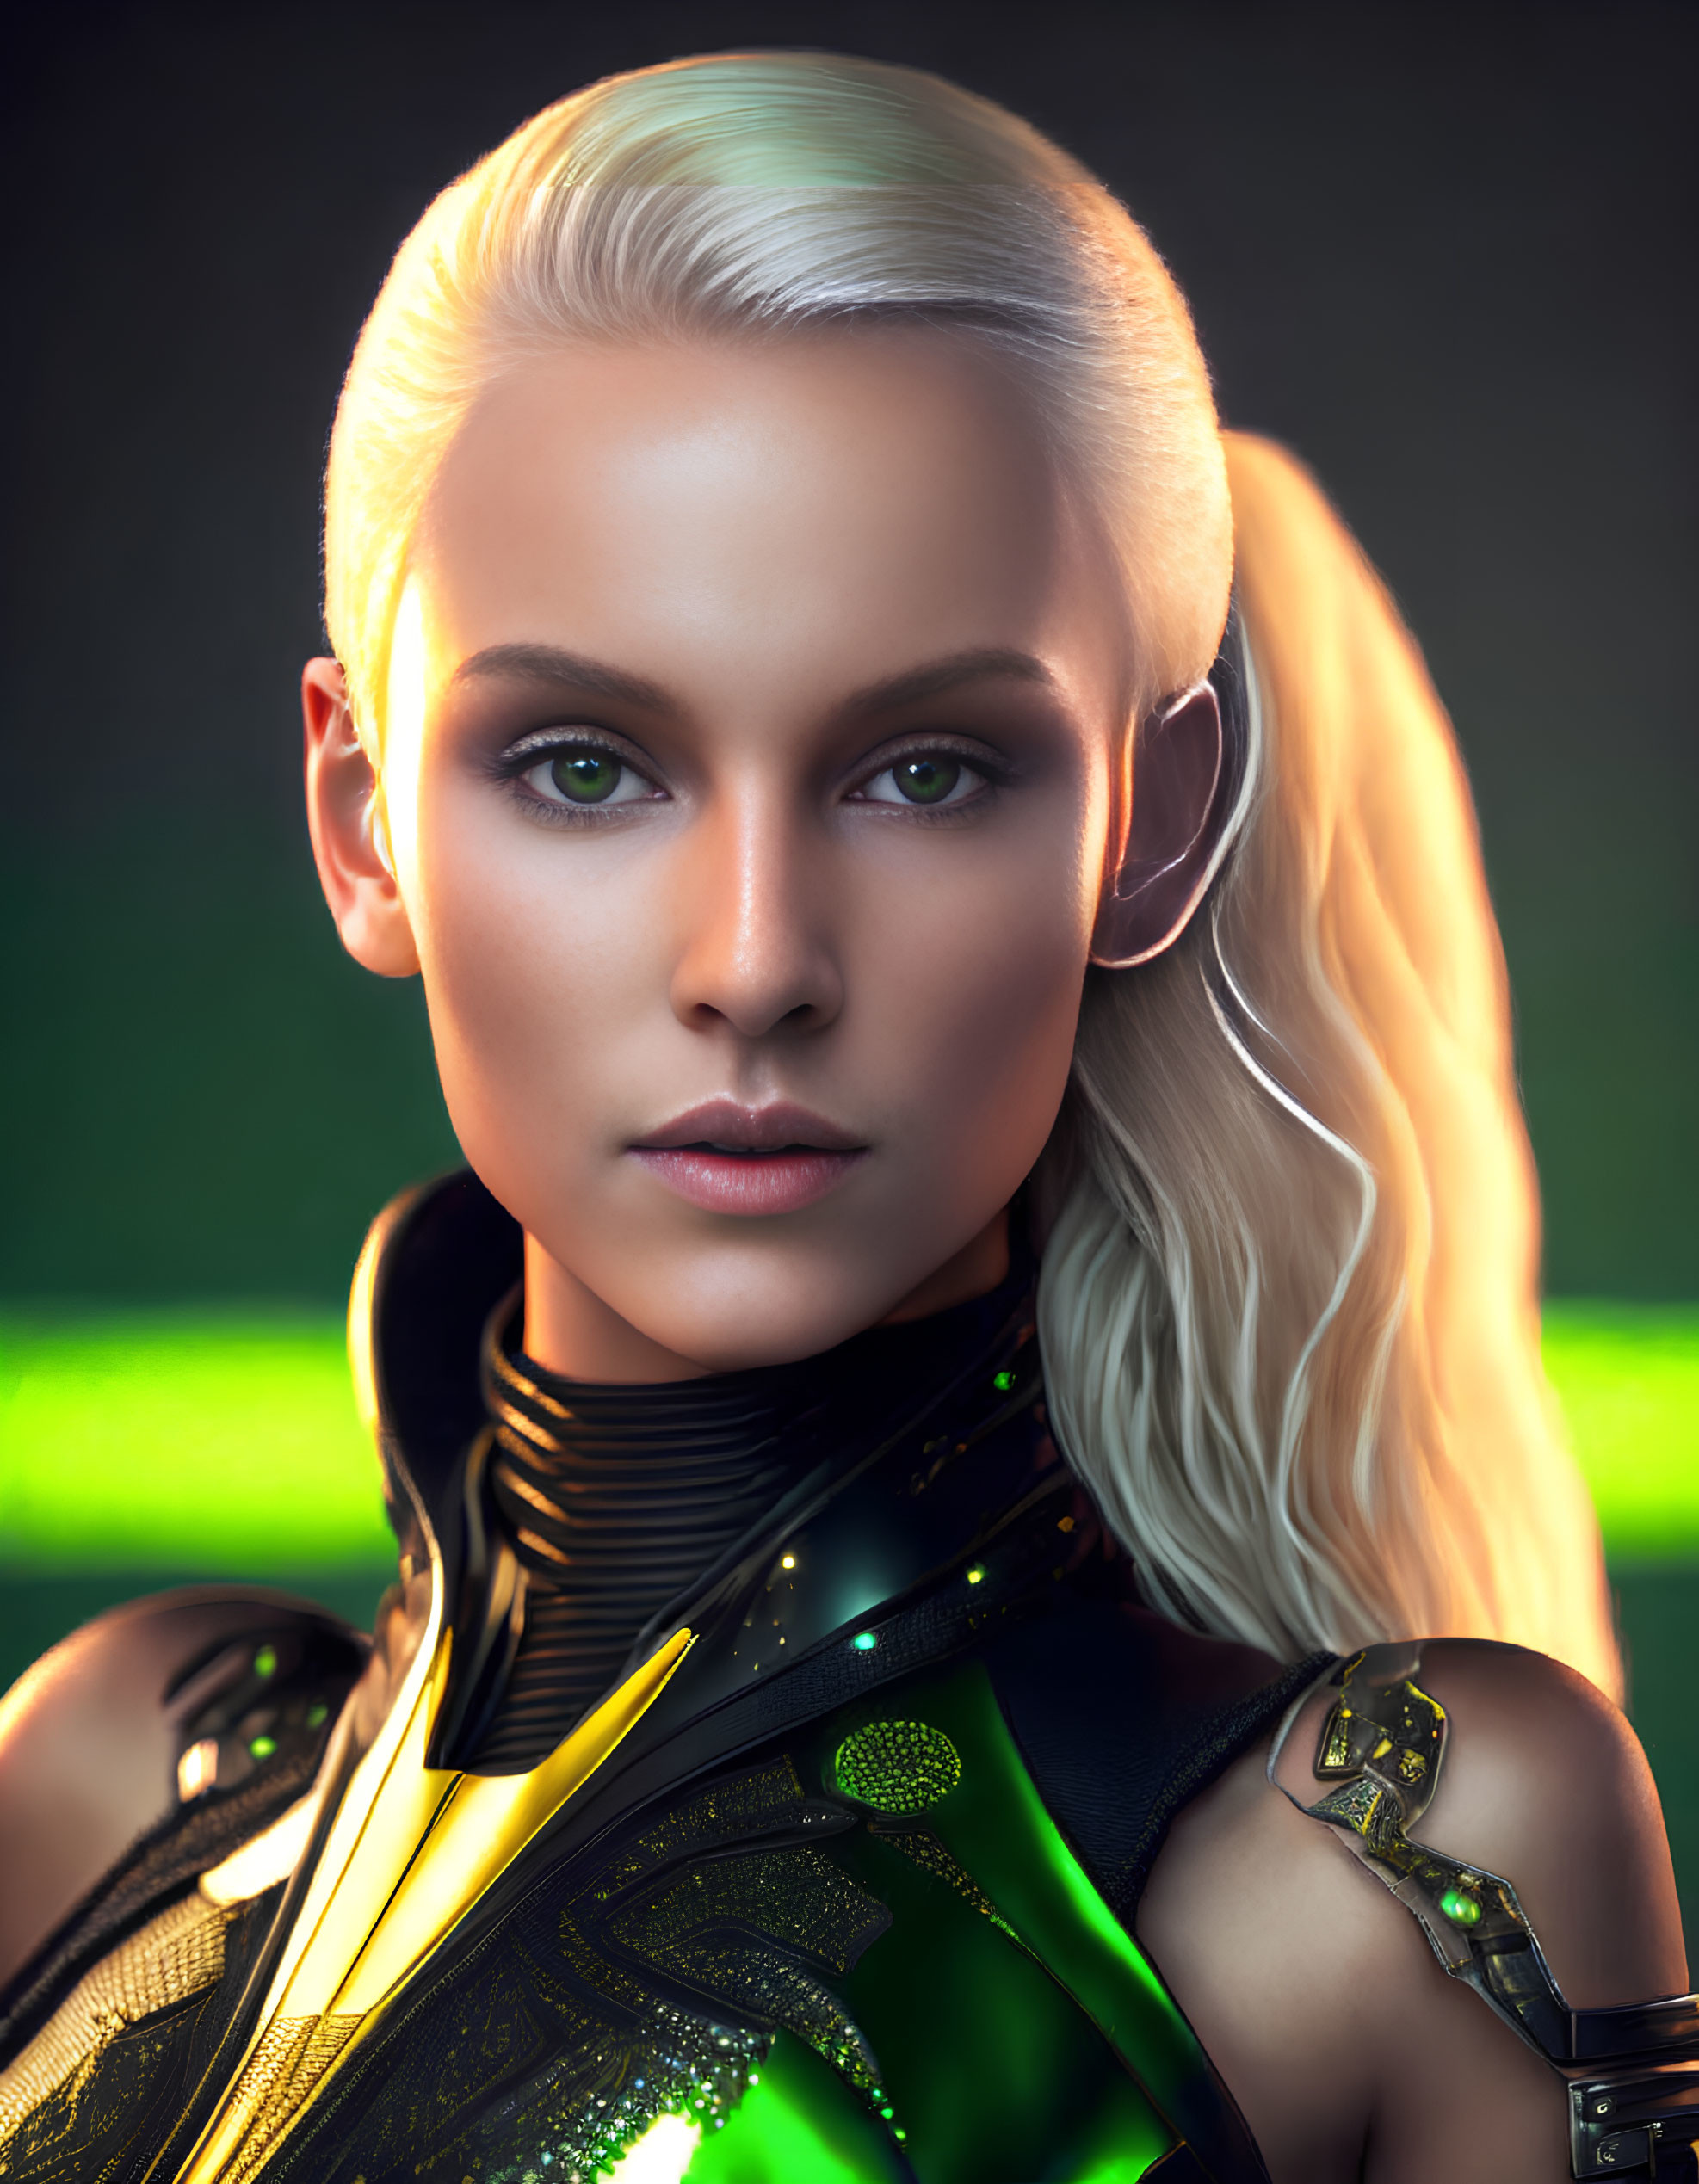 Futuristic digital art: Woman with platinum blonde hair in neon green lights